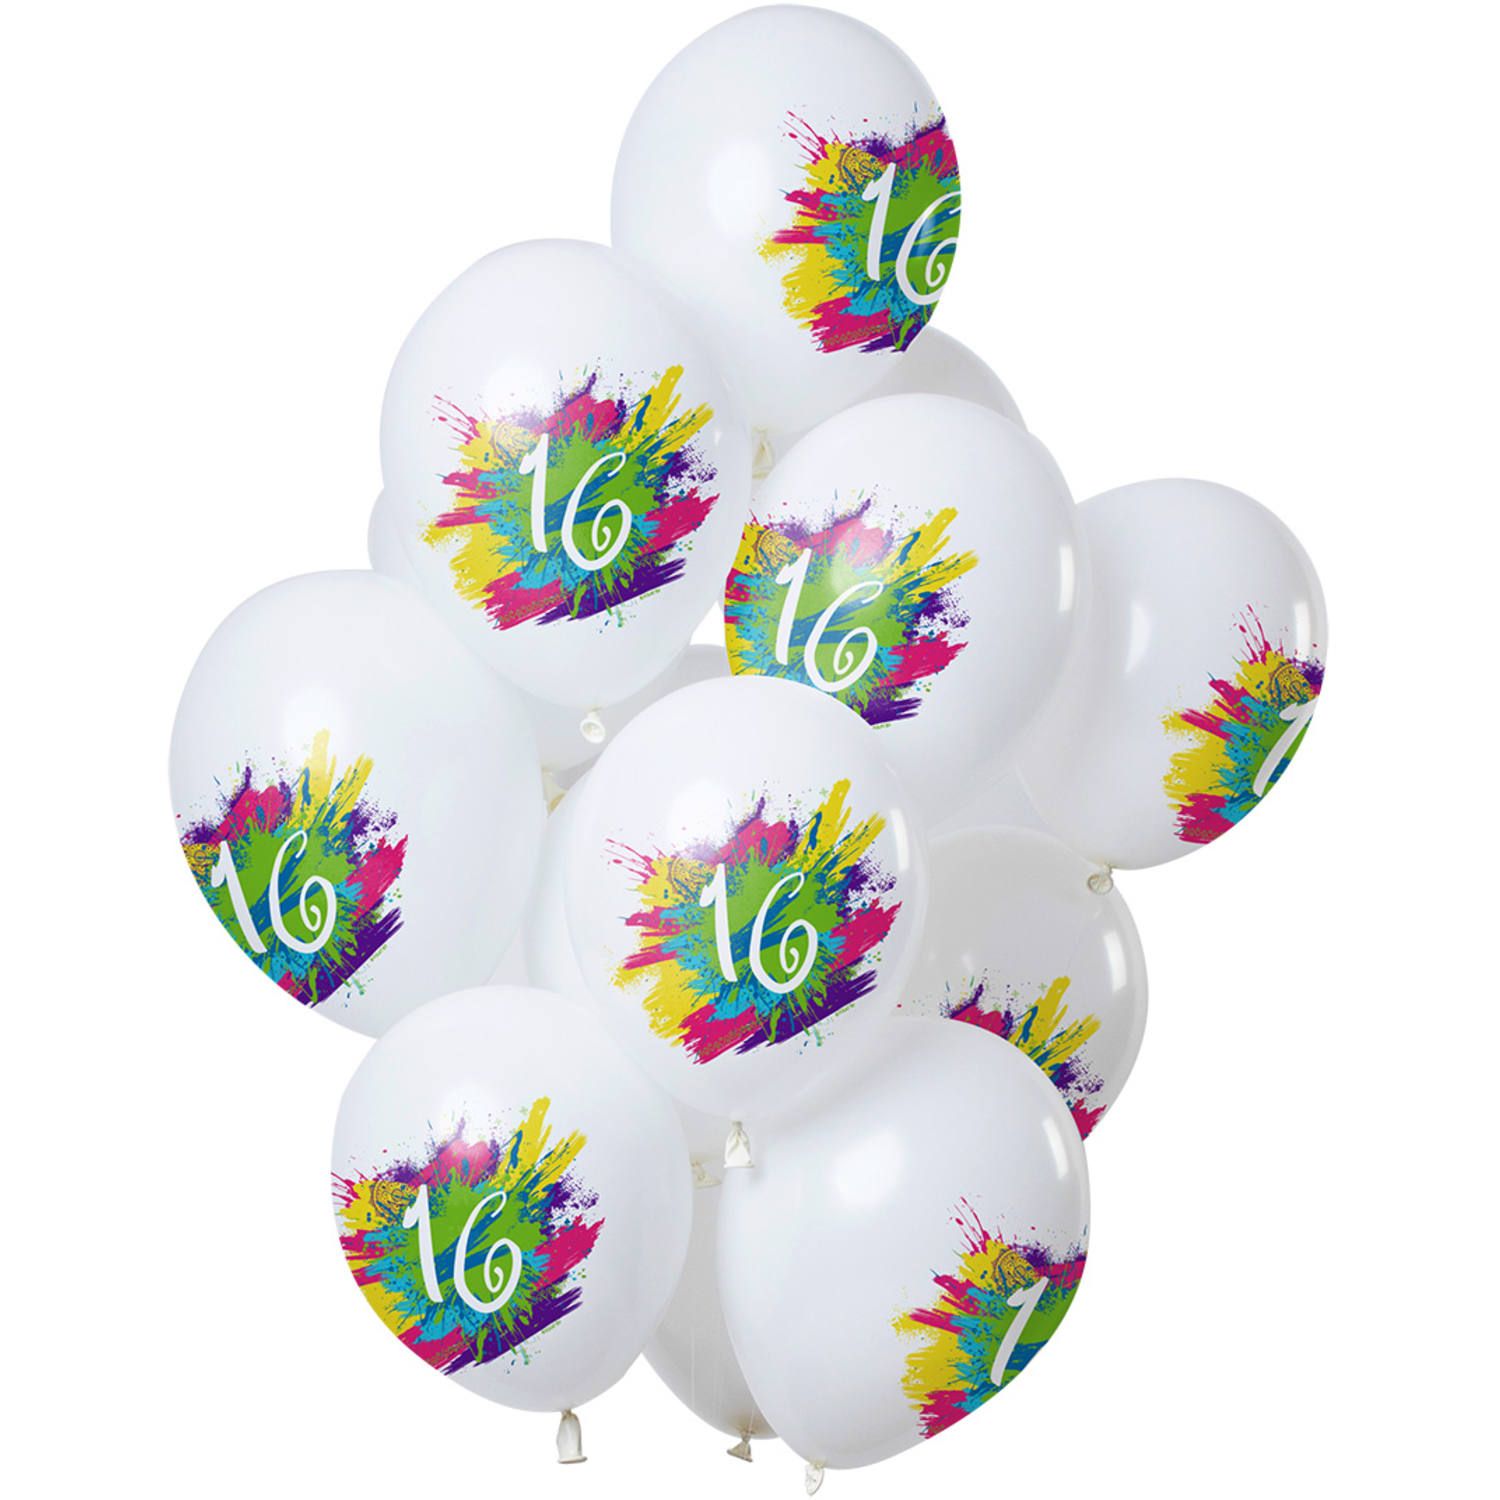 12 ballonnen color splash 16 jaar 30cm